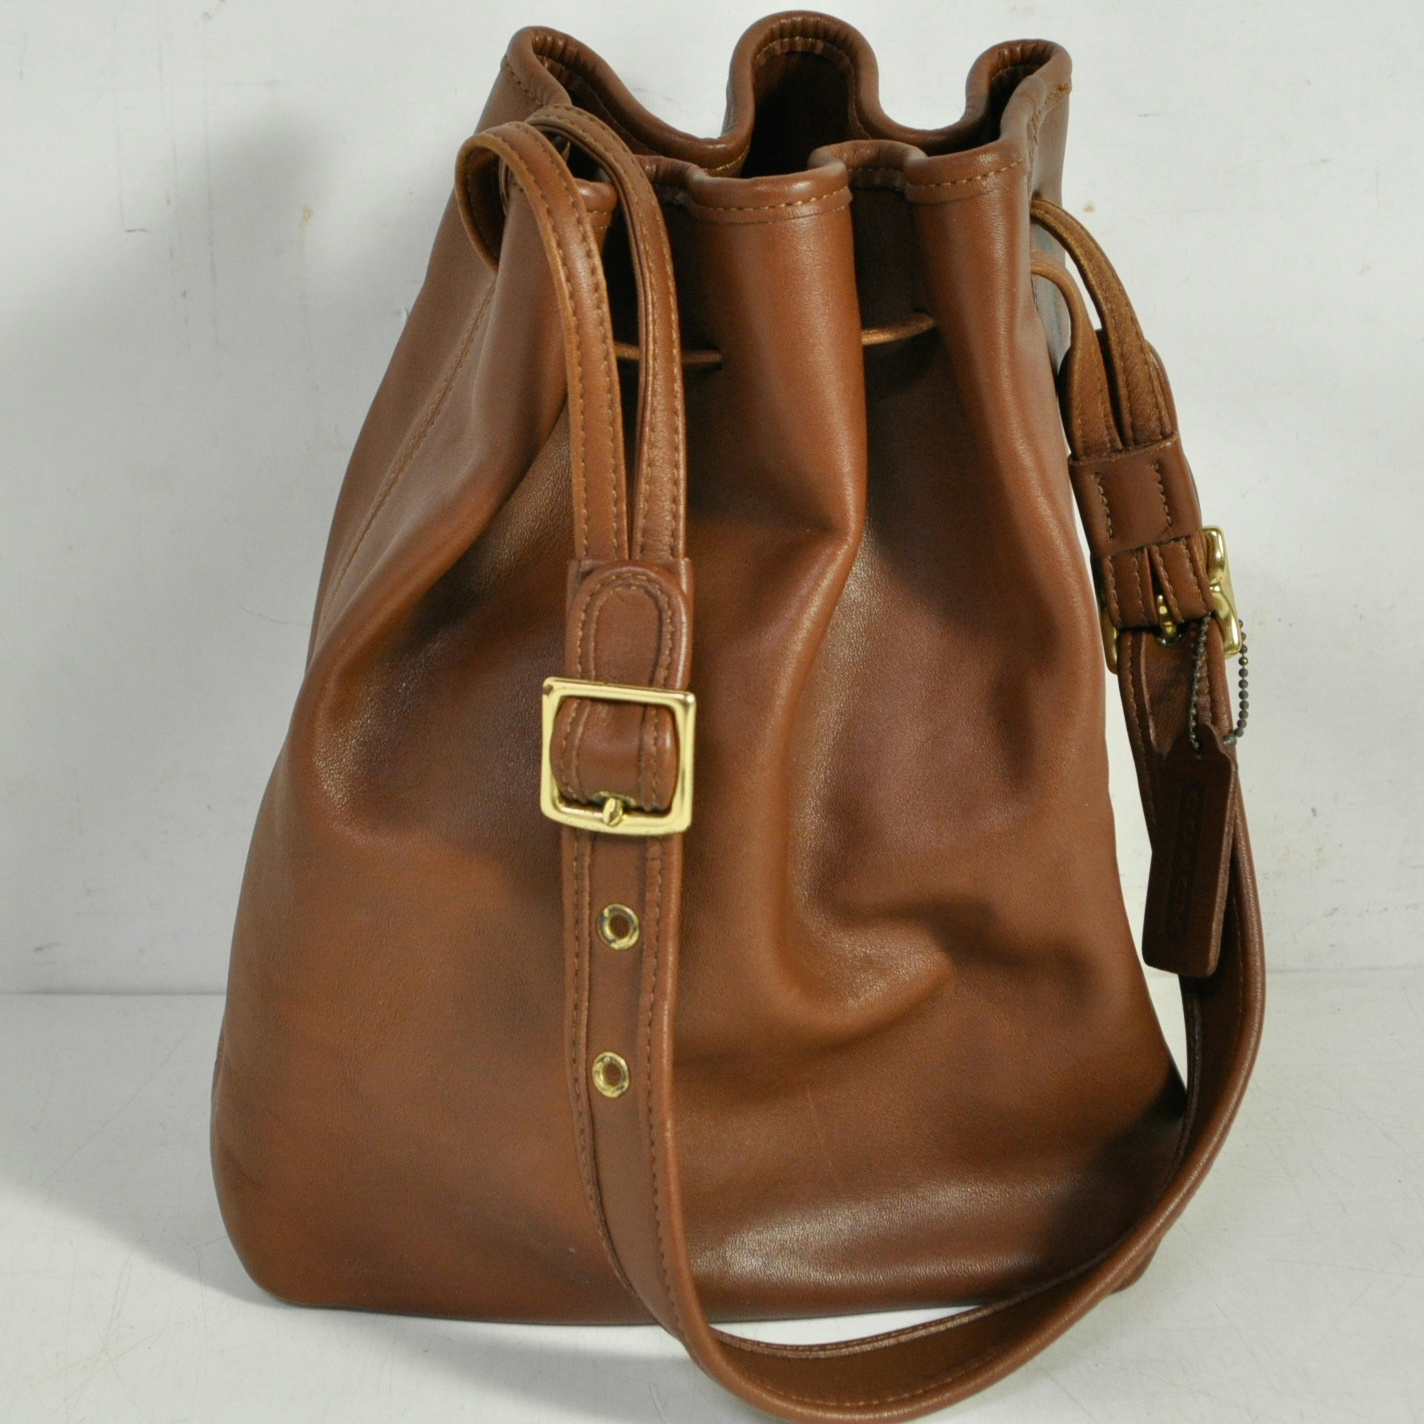 Coach Brown Leather Adjustable Strap Drawstring Bag | eBay